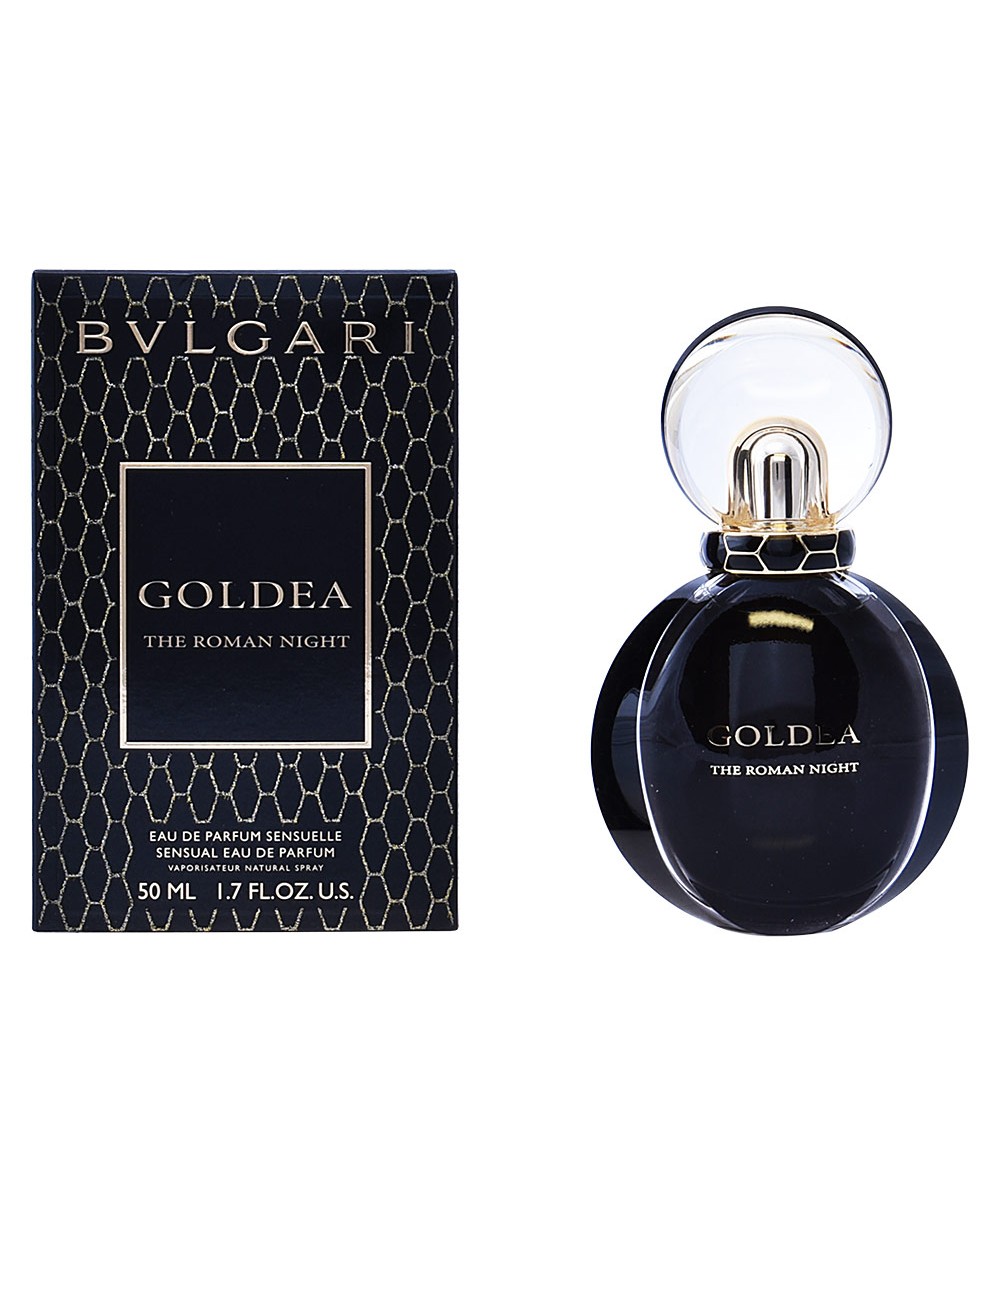 GOLDEA THE ROMAN NIGHT eau de parfum sensuelle vaporisateur NE92801